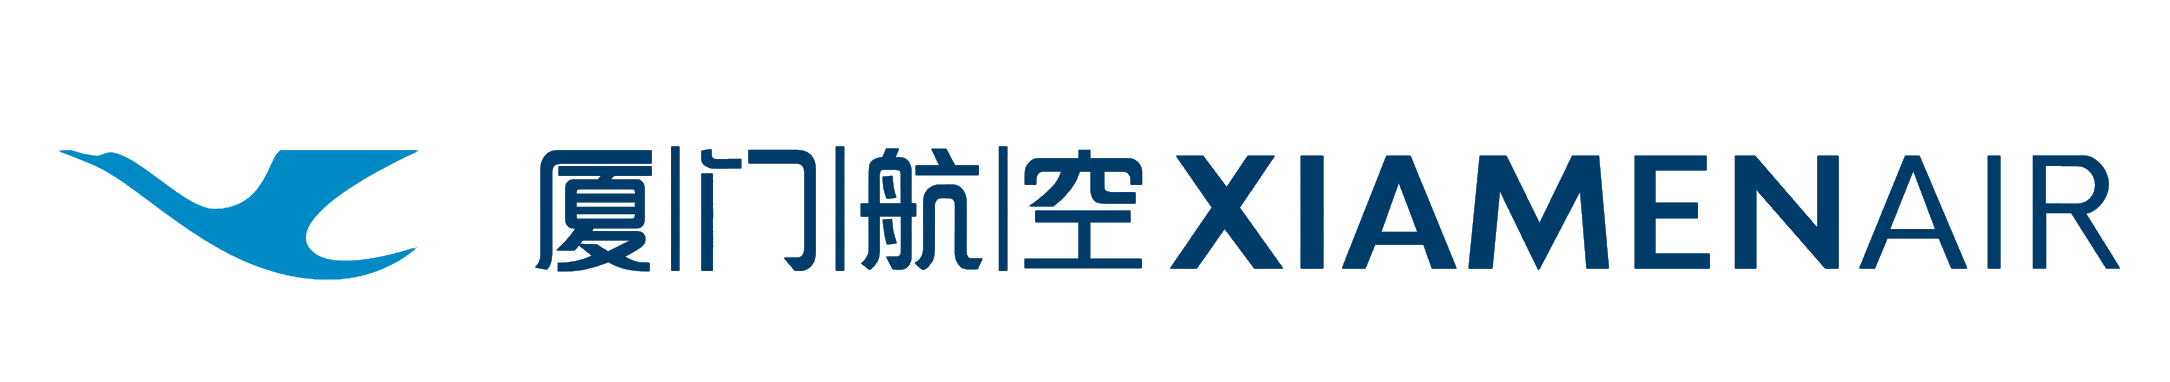 XiamenAir (Xiamen Airlines) logo, logotype